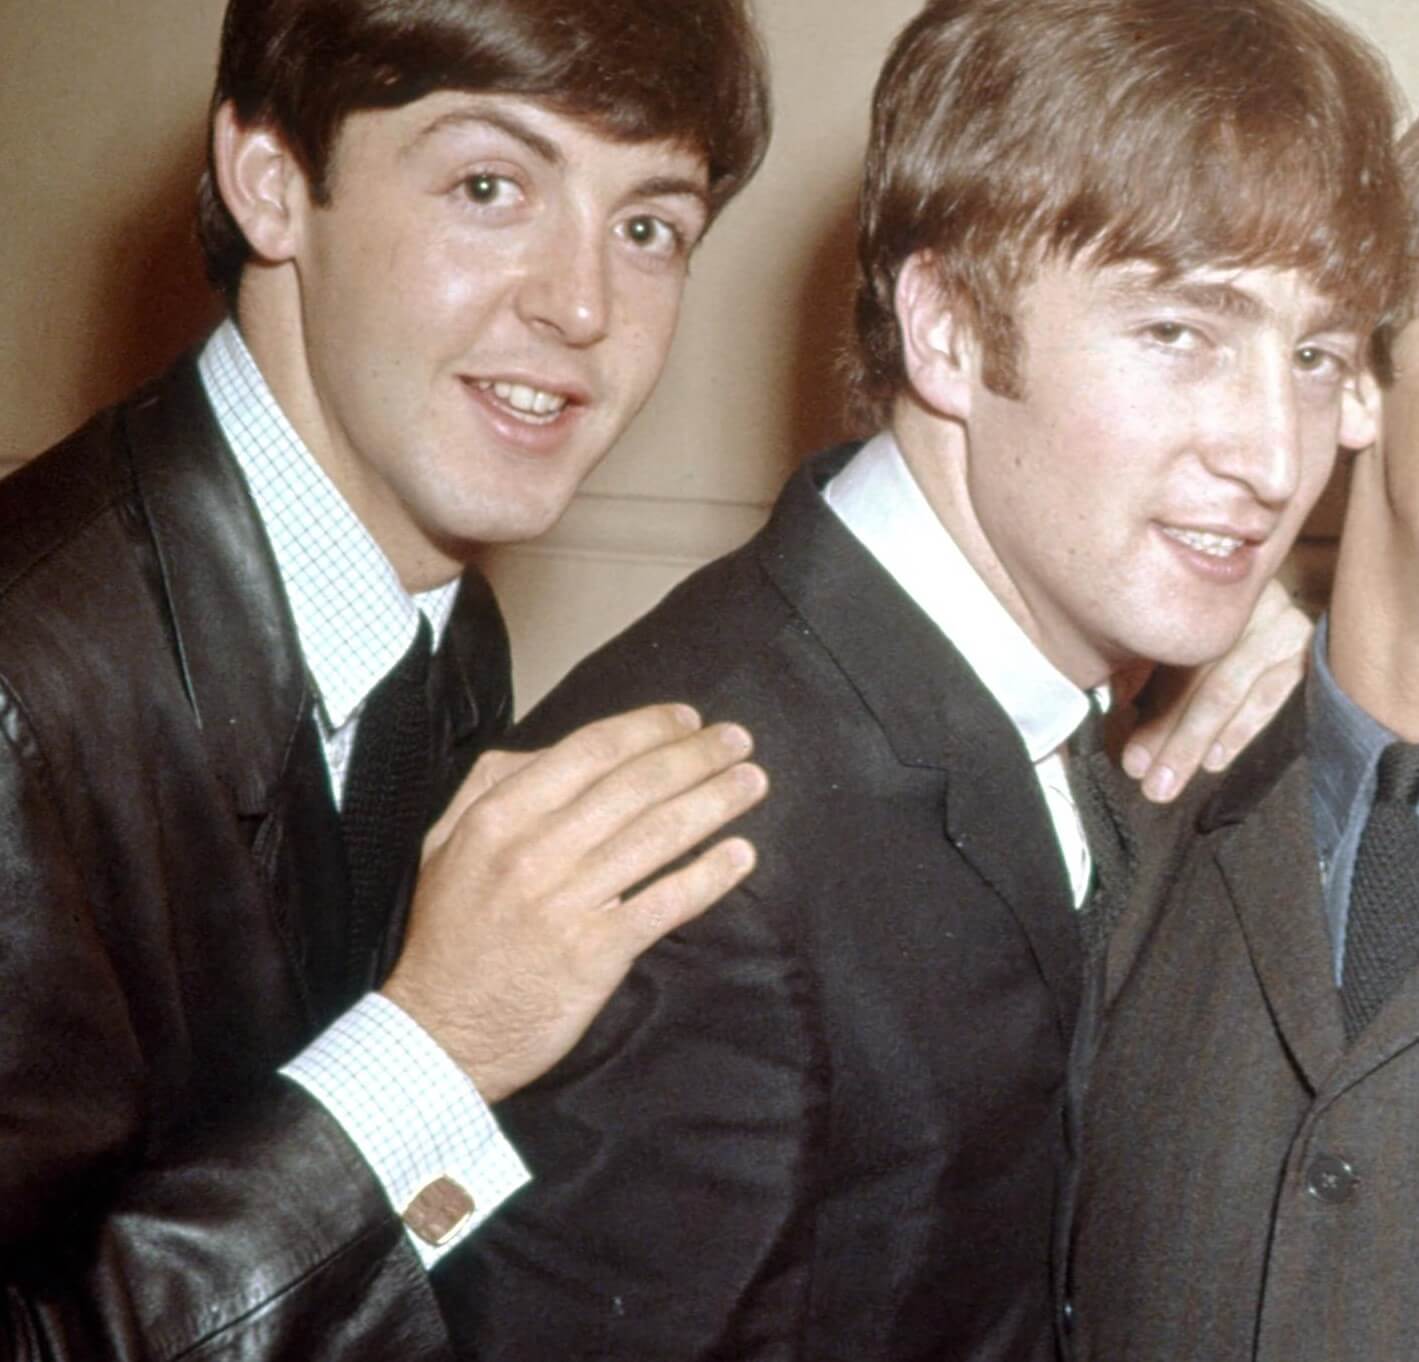 Paul McCartney and John Lennon during The Beatles' "Eight Days a Week" era